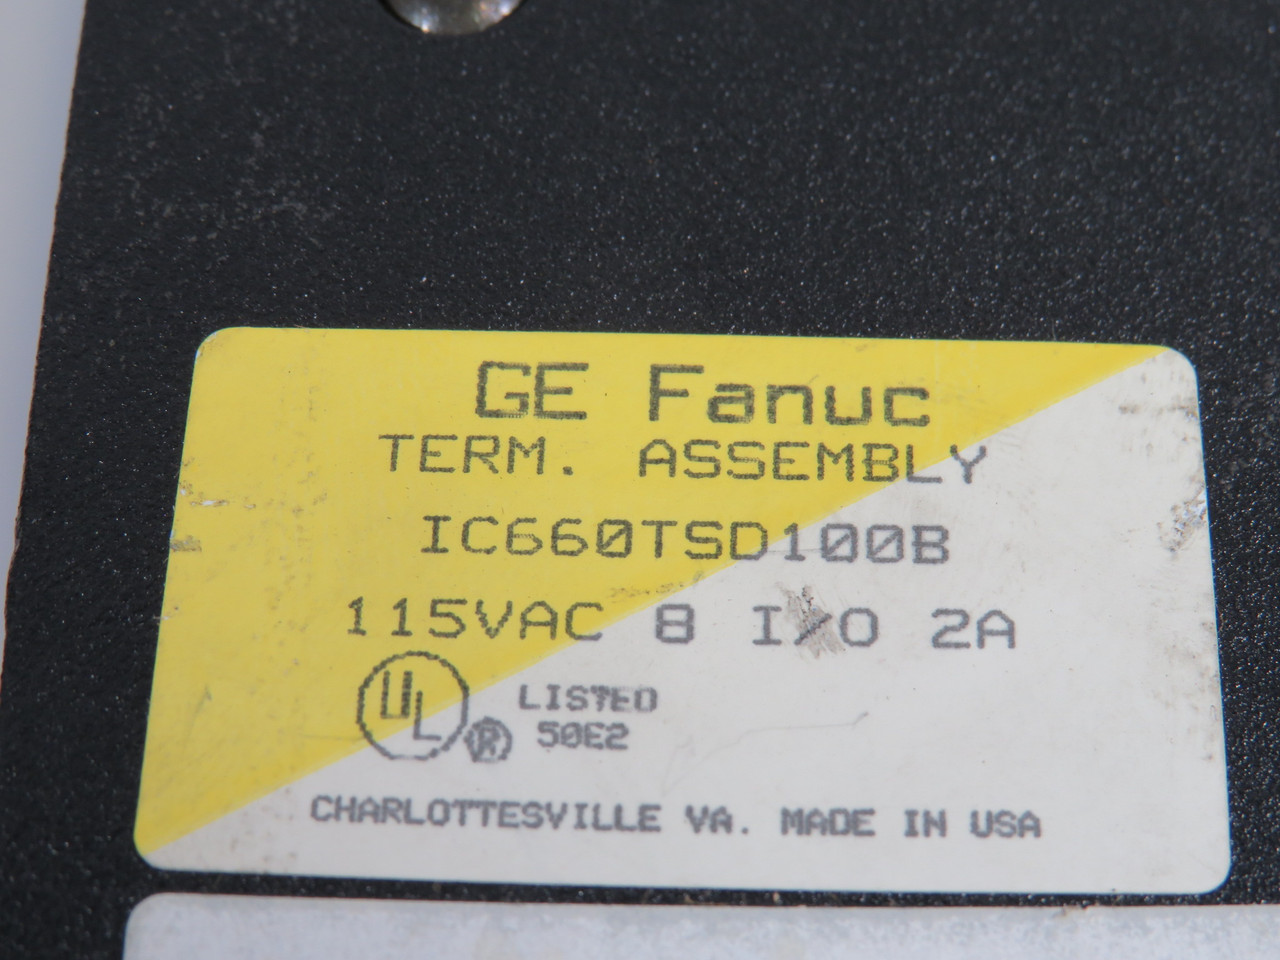 GE Fanuc IC660TSD100B I/O Terminal Assy 115V MISSING CONTACT SCREW USED